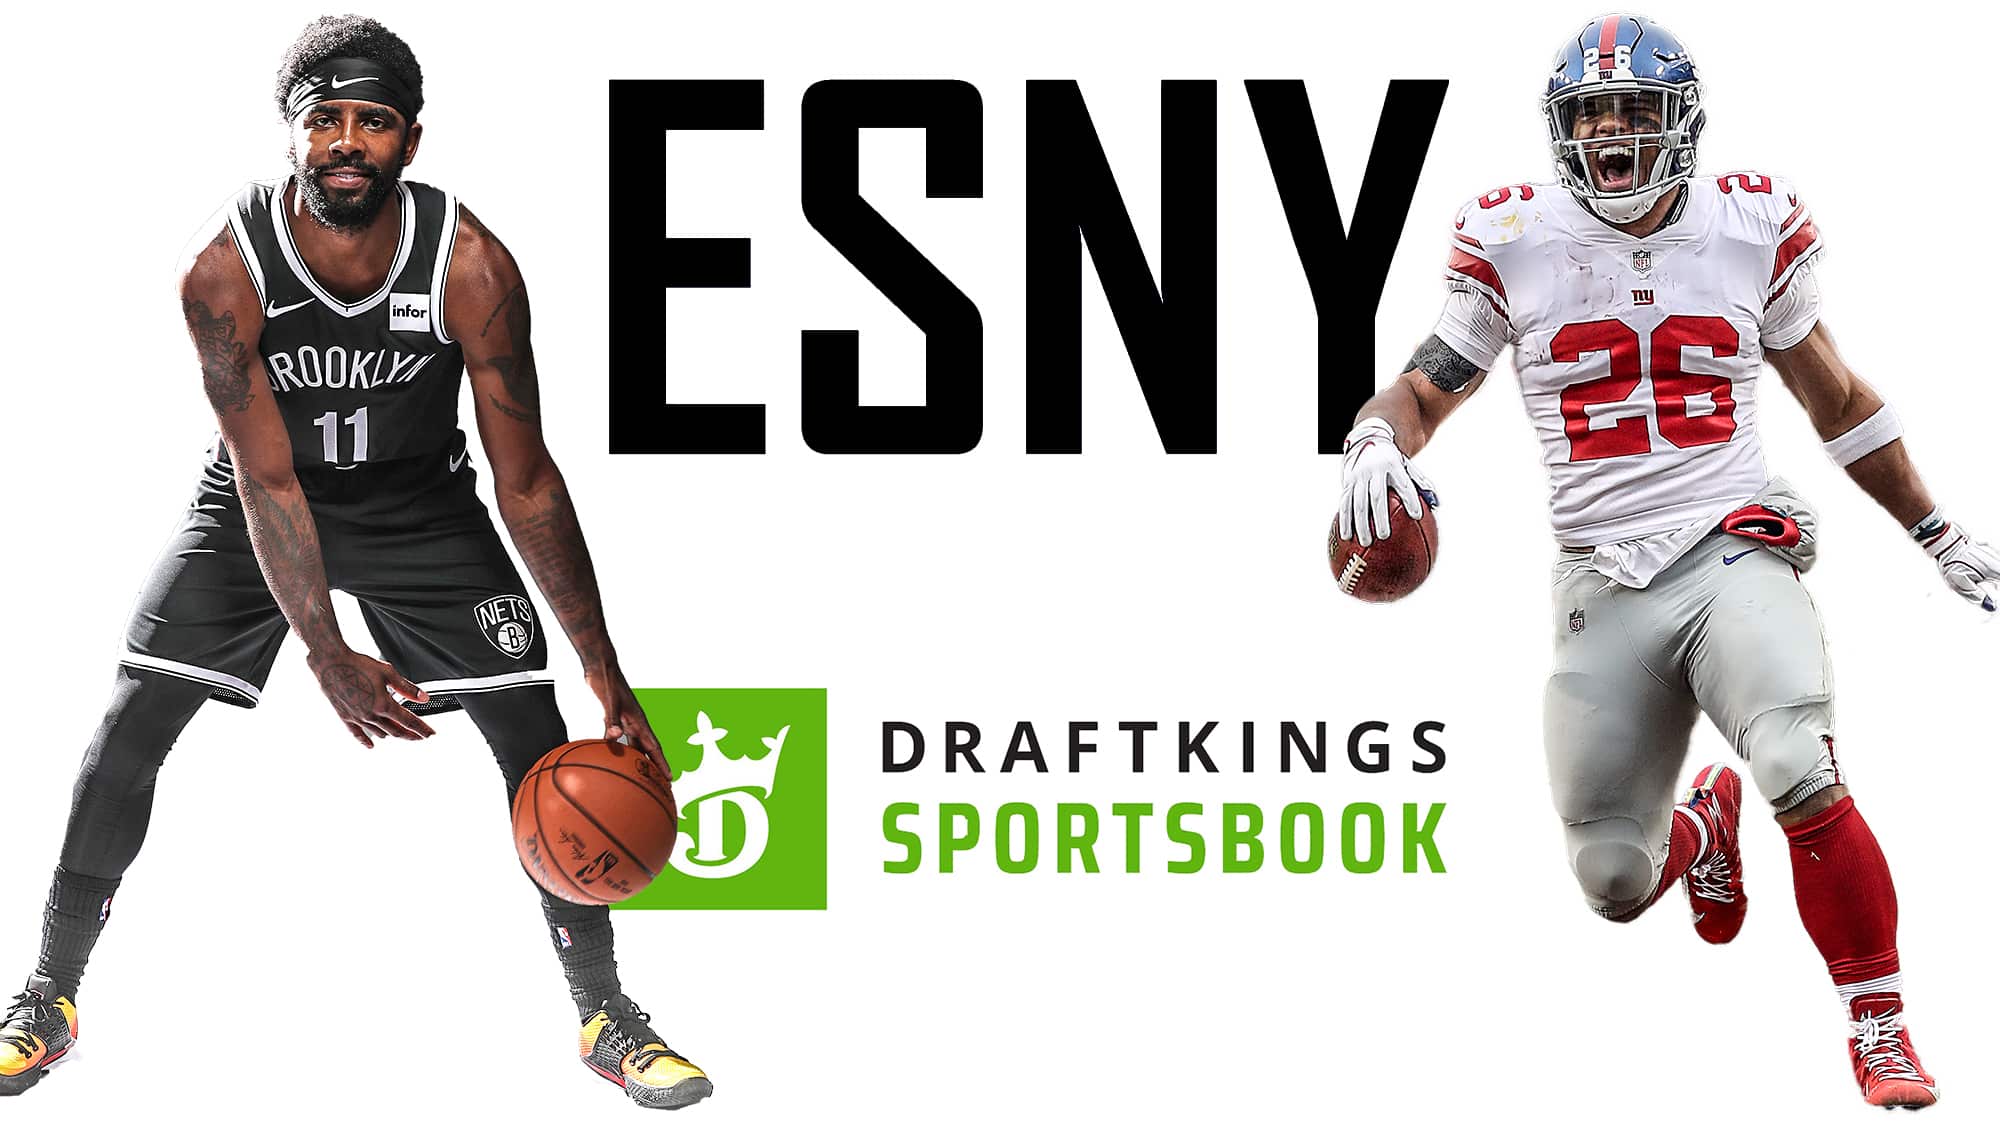 ESNY, DraftKings Sportsbook, Kyrie Irving, Saquon Barkley